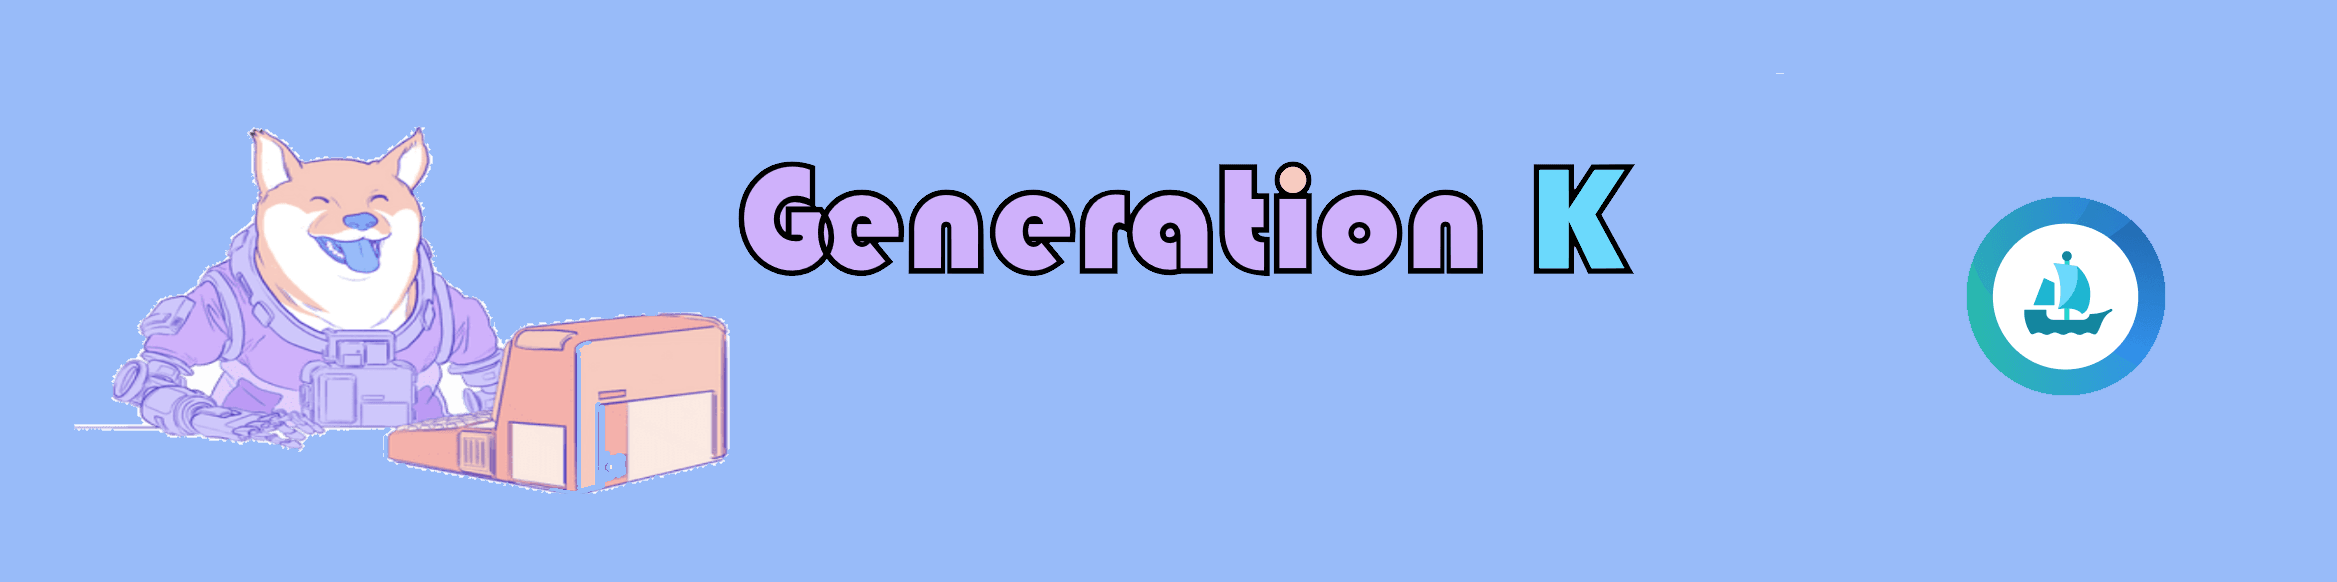 Generation_K banner